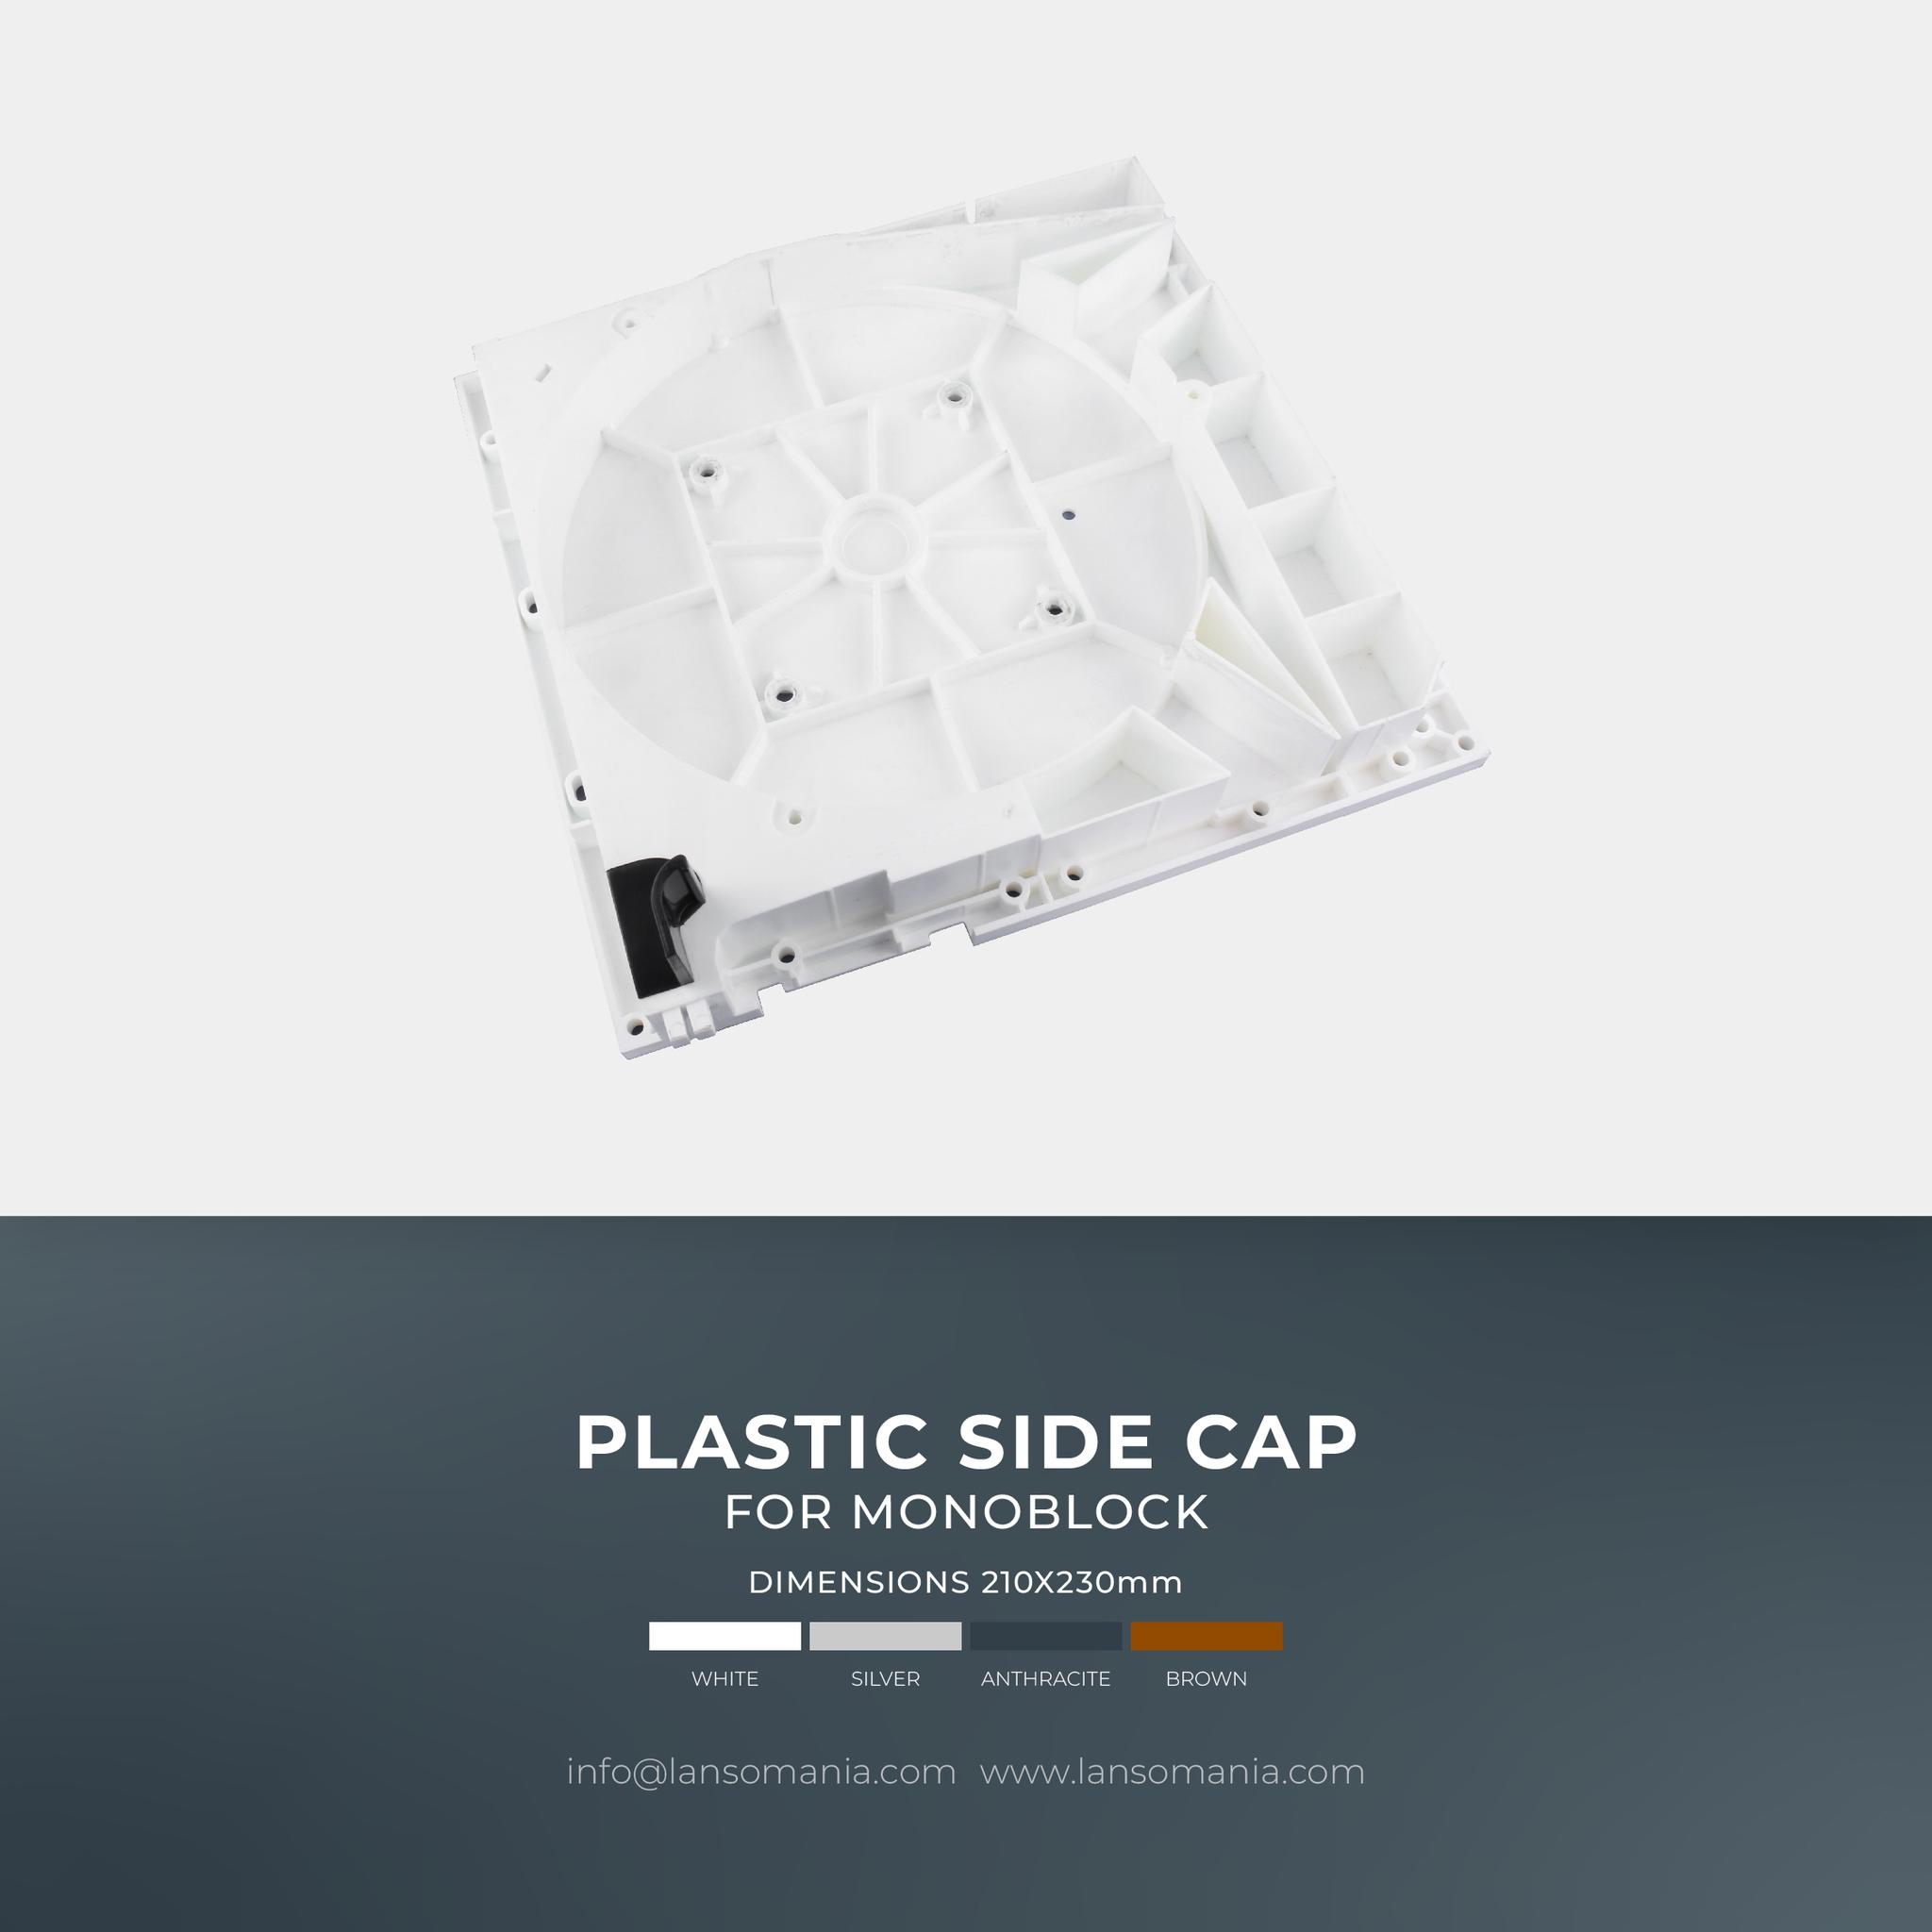 Plastic side cap for Monoblock